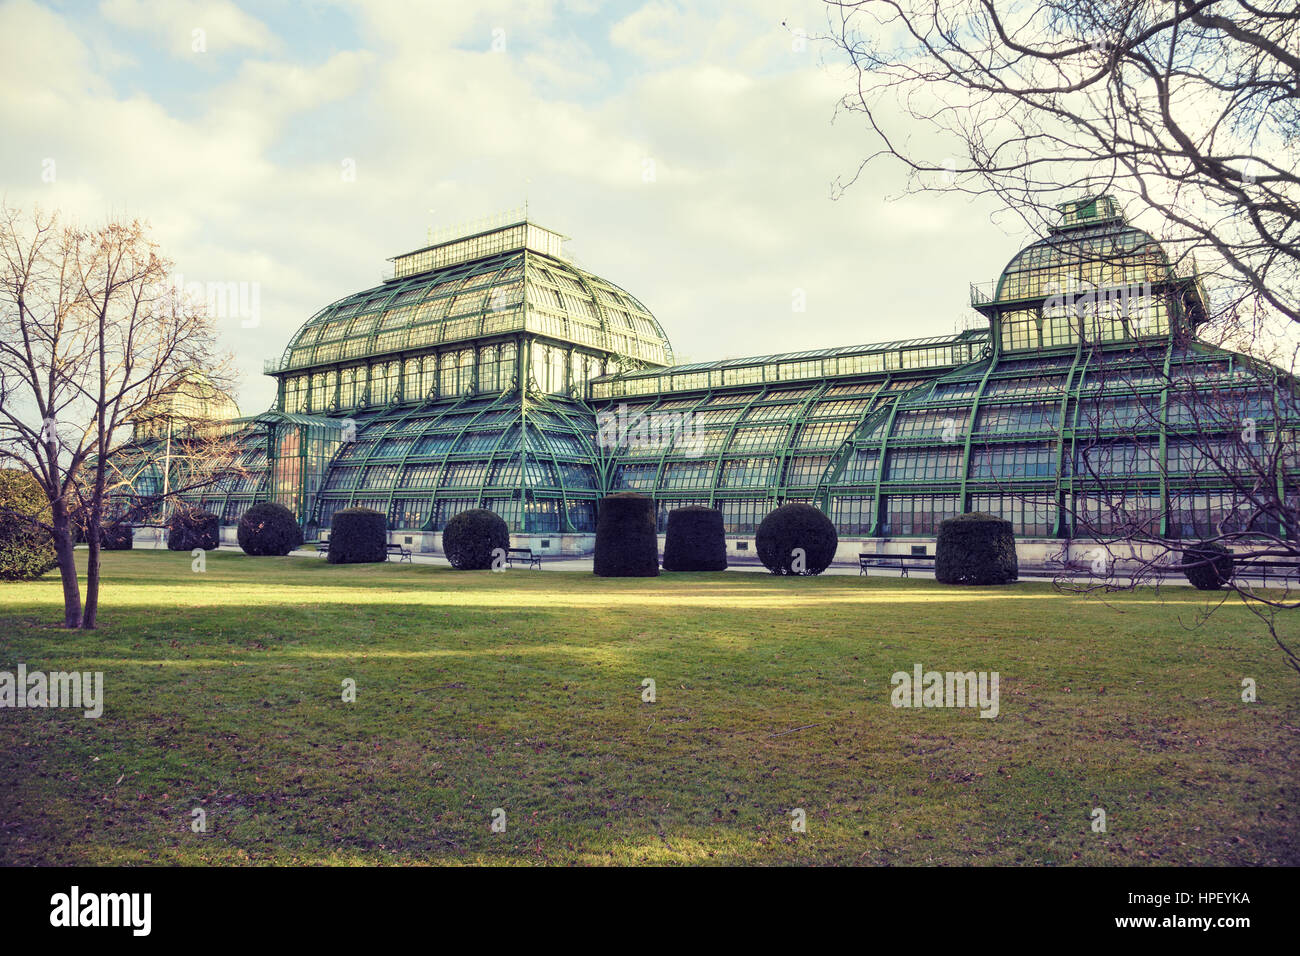 The winter Palmenhaus Schoenbrunn is a large greenhouse in Wien, Austria Stock Photo